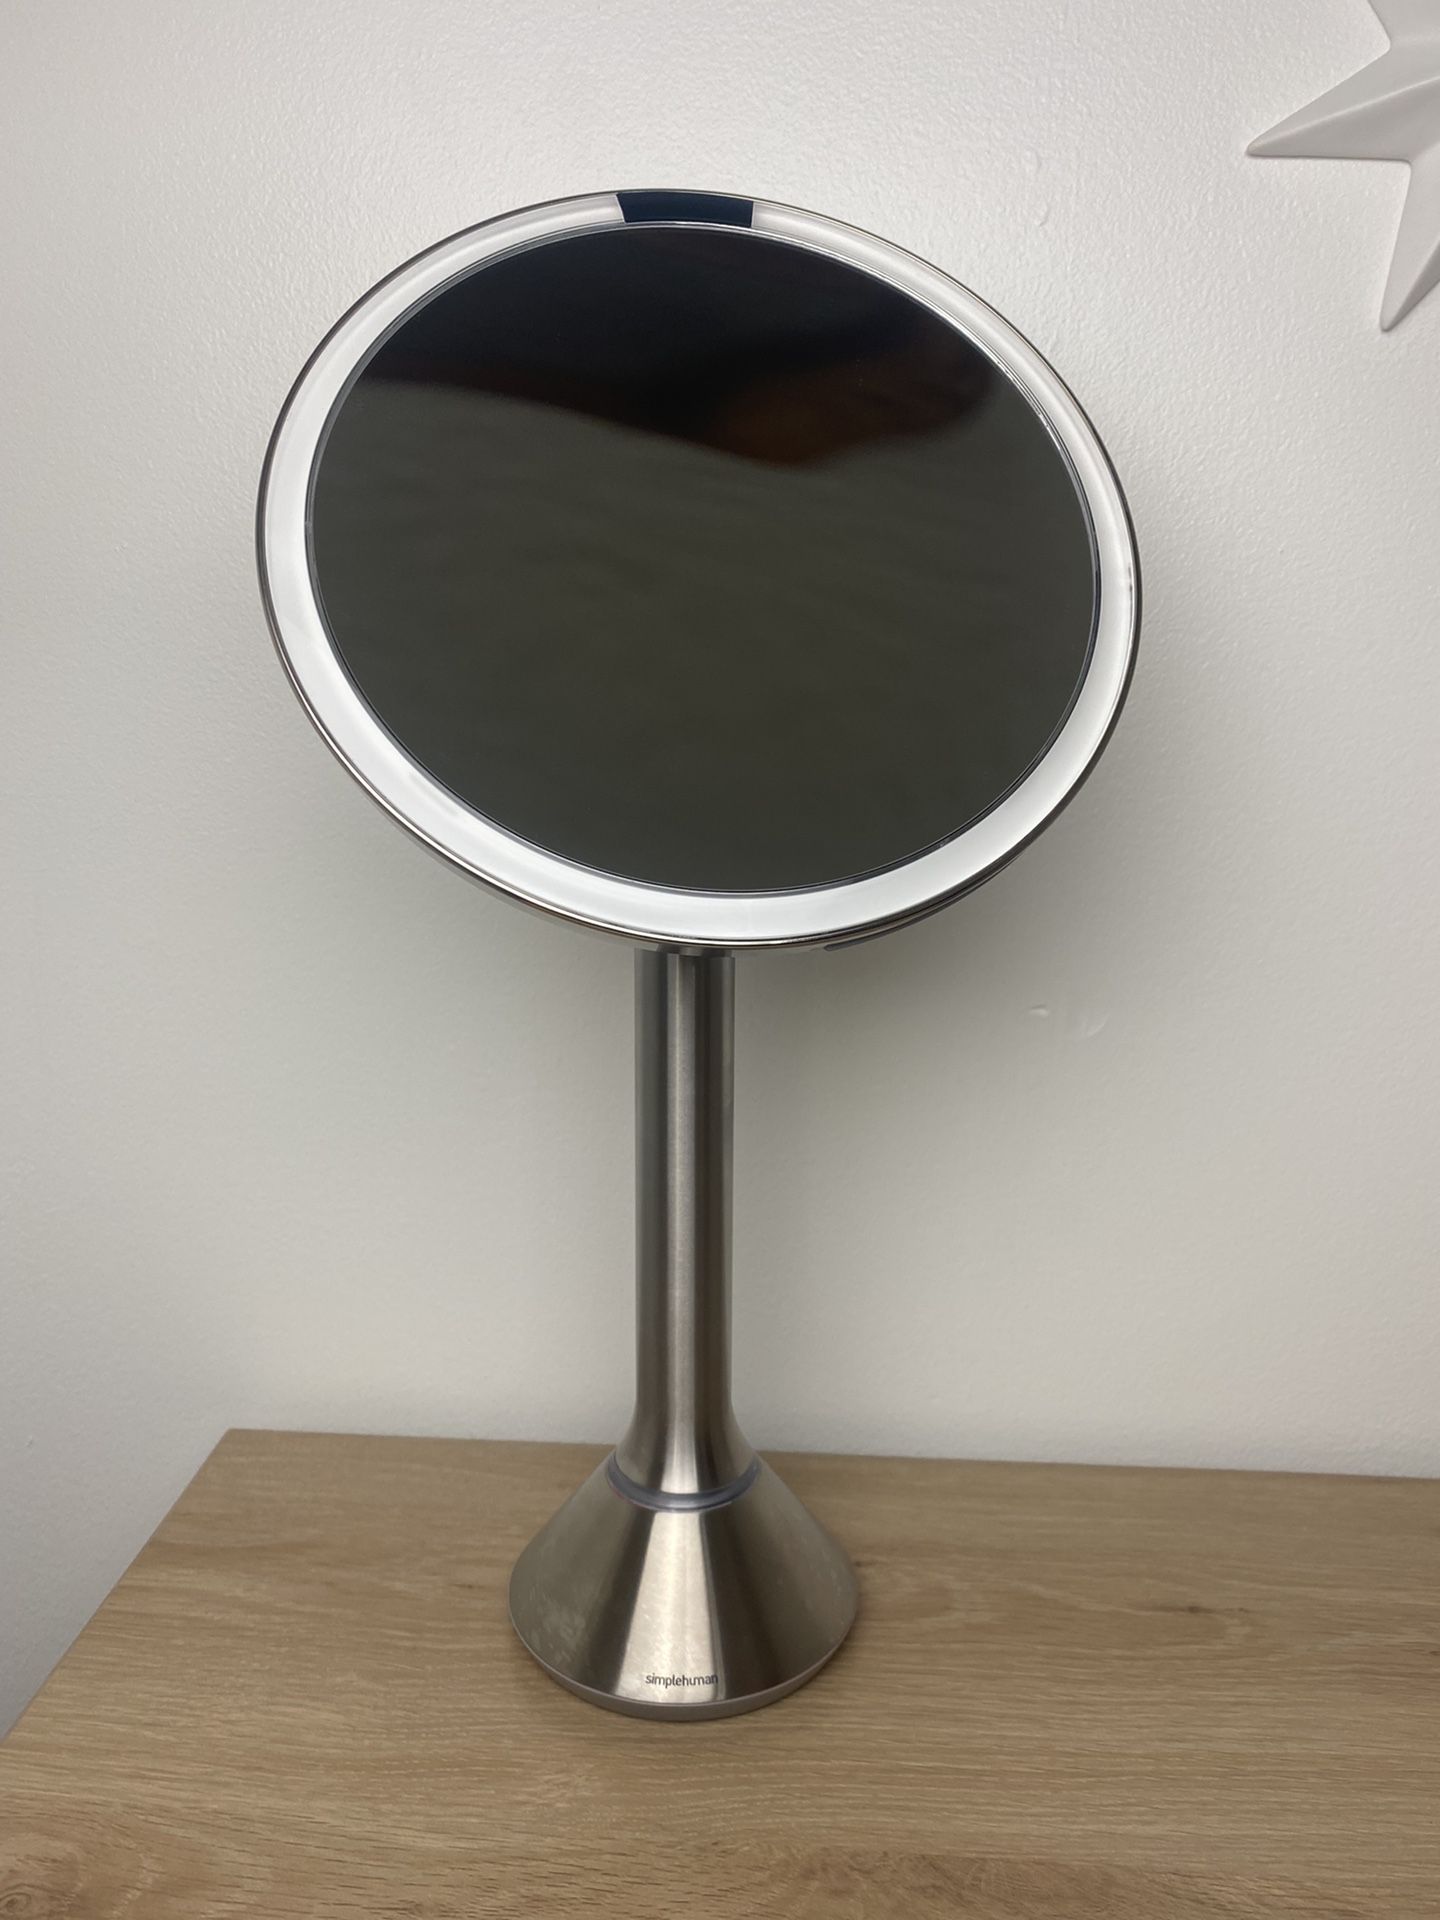 simplehuman 8" Sensor Lighted Mirror with Brightness Control